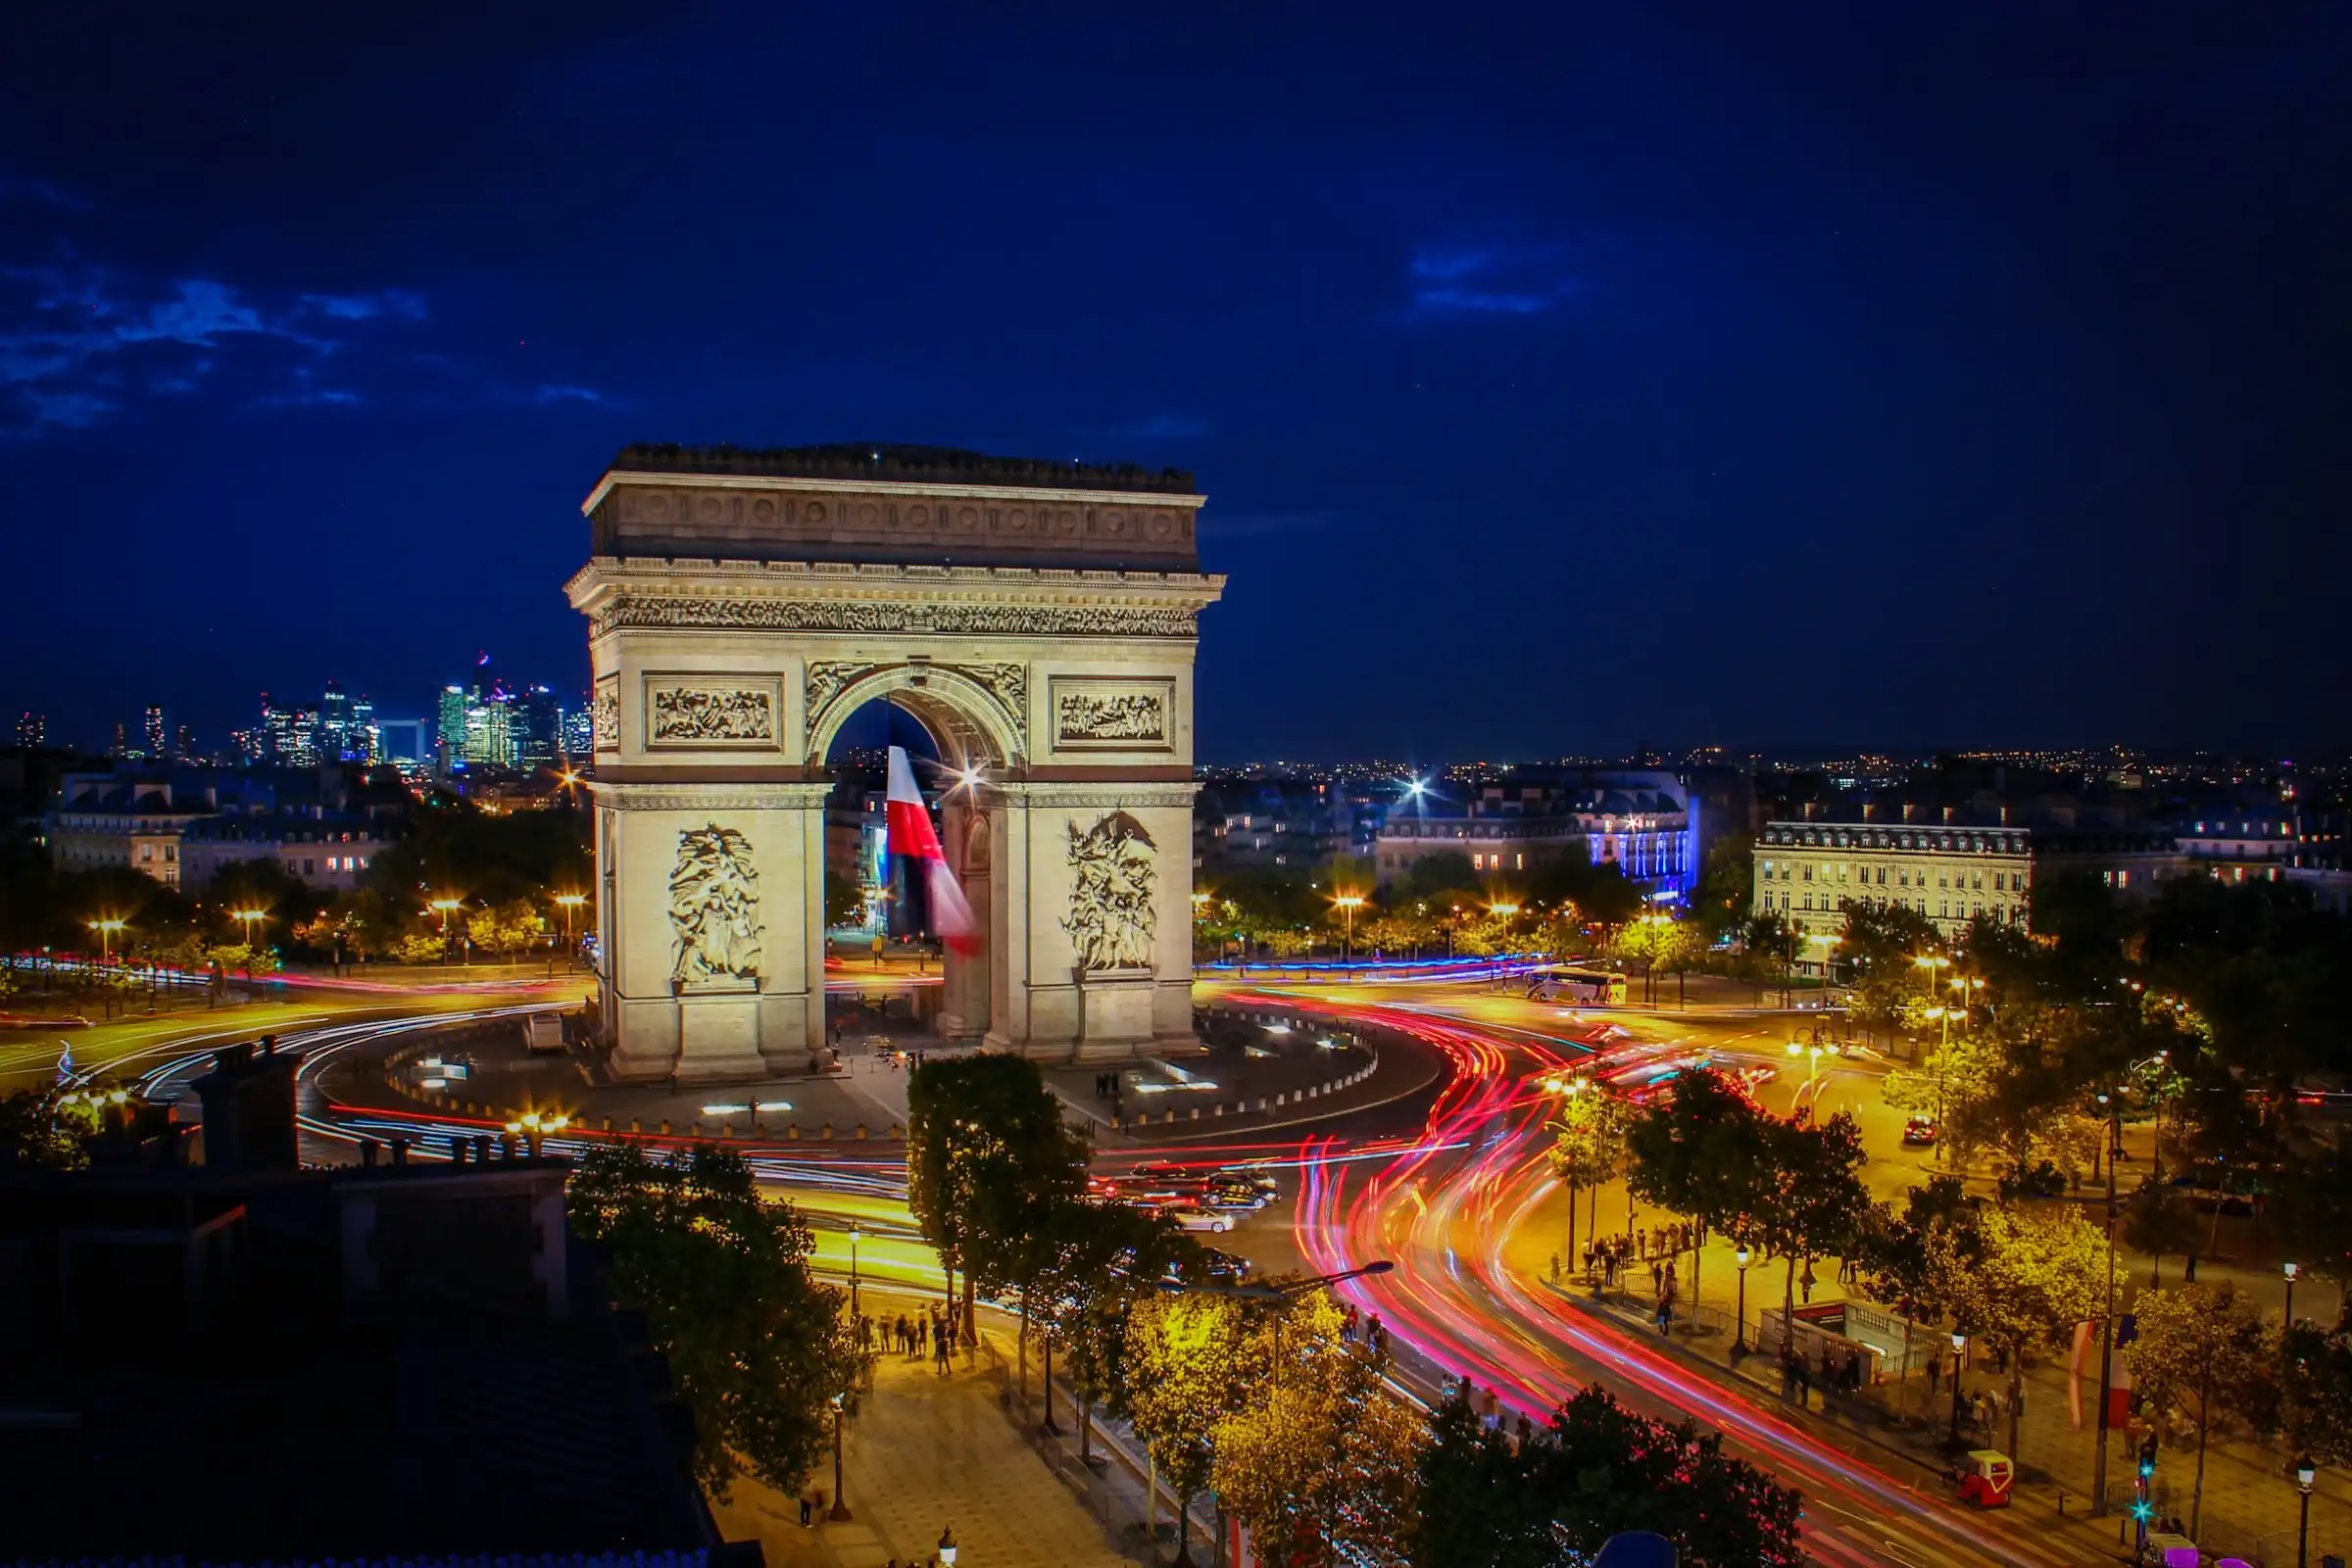 A nightime photo of the Arc de Triomphe in Paris